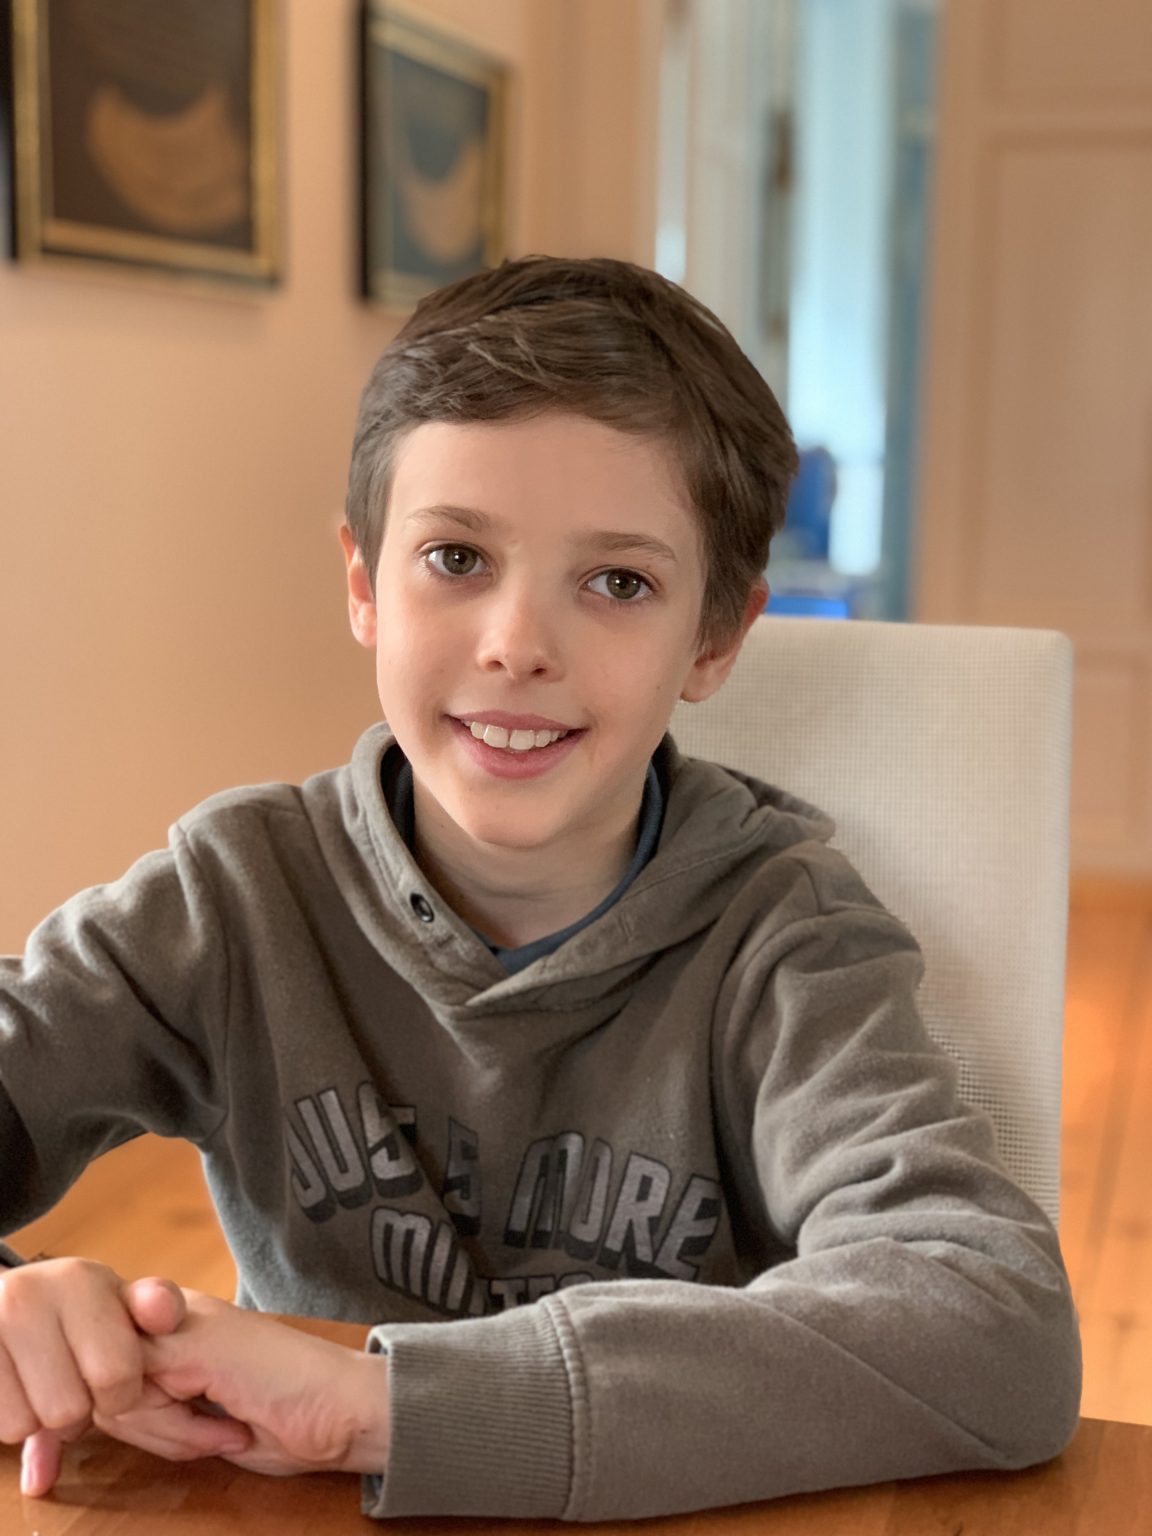 Denmark’s Prince Henrik stars in 11th birthday photos taken by little ...